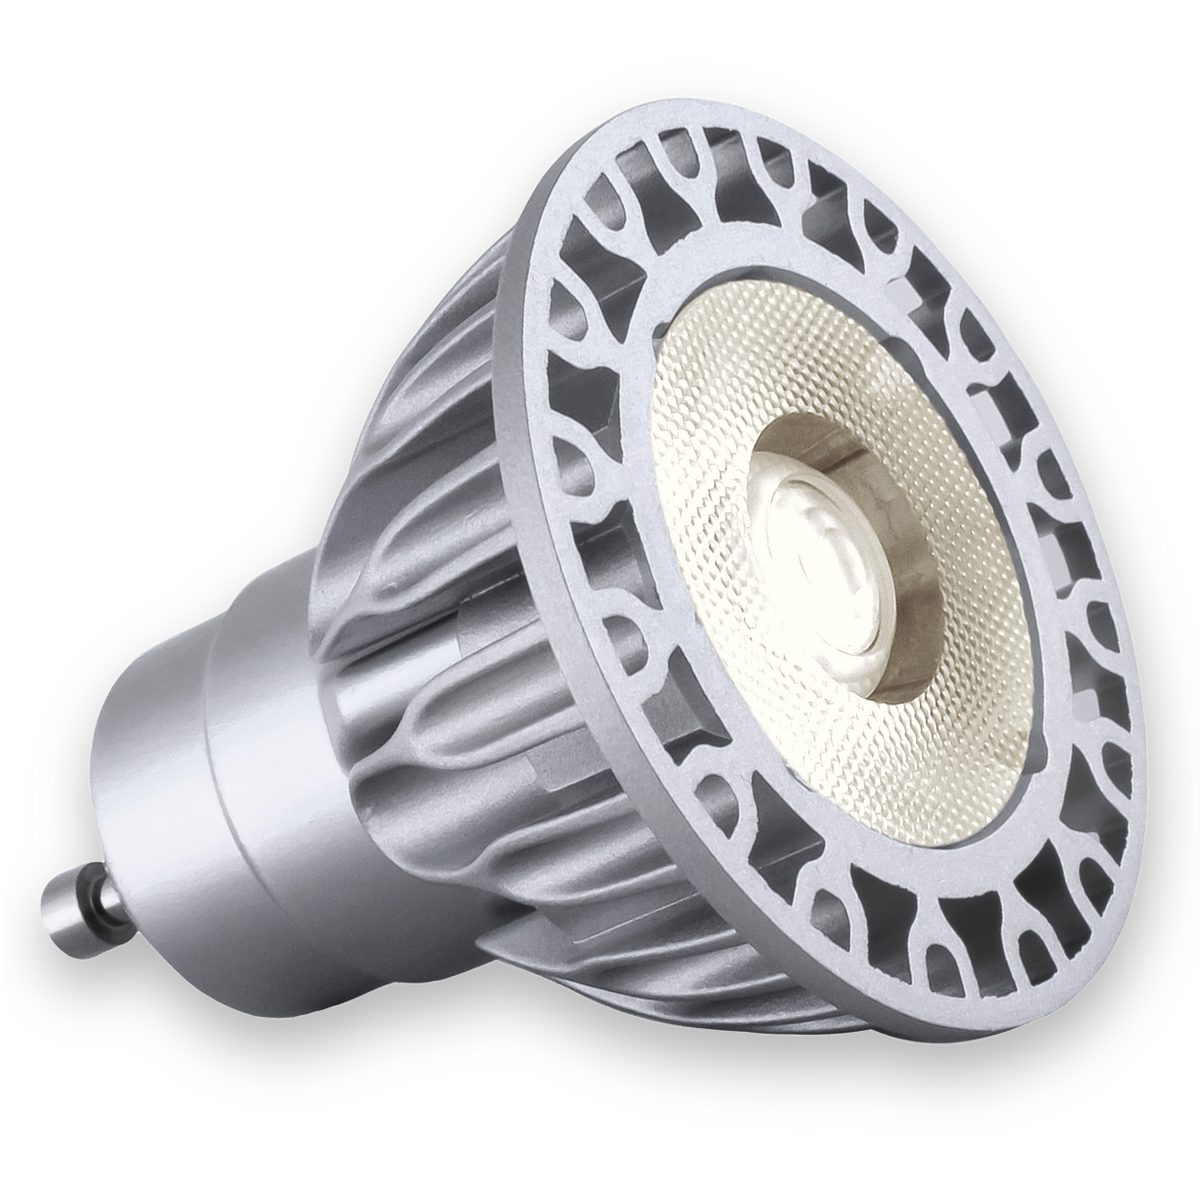 Soraa LED-Leuchtmittel Soraa Vivid 3 MR16 GU10 - Vollspektrum LED - 7.5Watt, 25°, GU10, Warmton - wie Halogen, Vollspektrum LED mit CRI 95 R9 - dimmbar | 